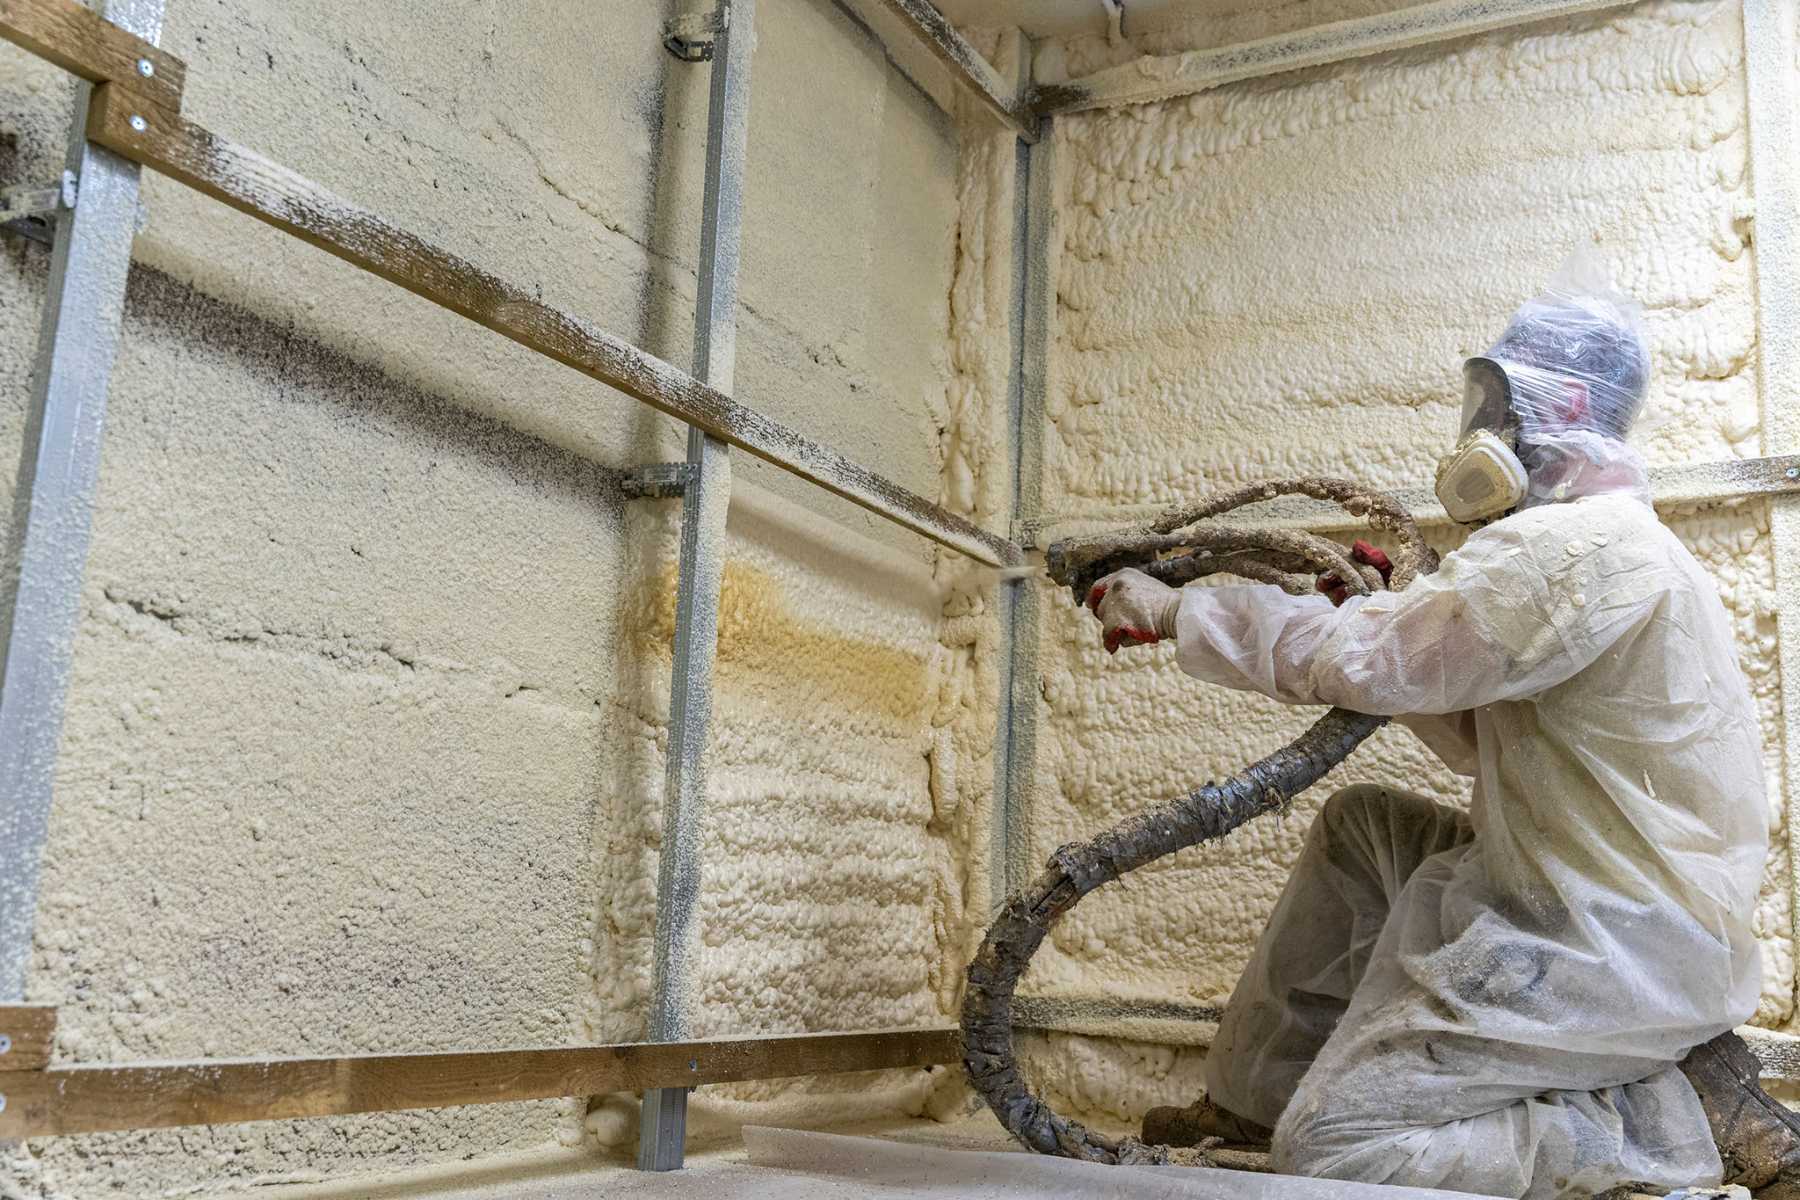 Worker installing spray foam insulation on walls in a metal building.